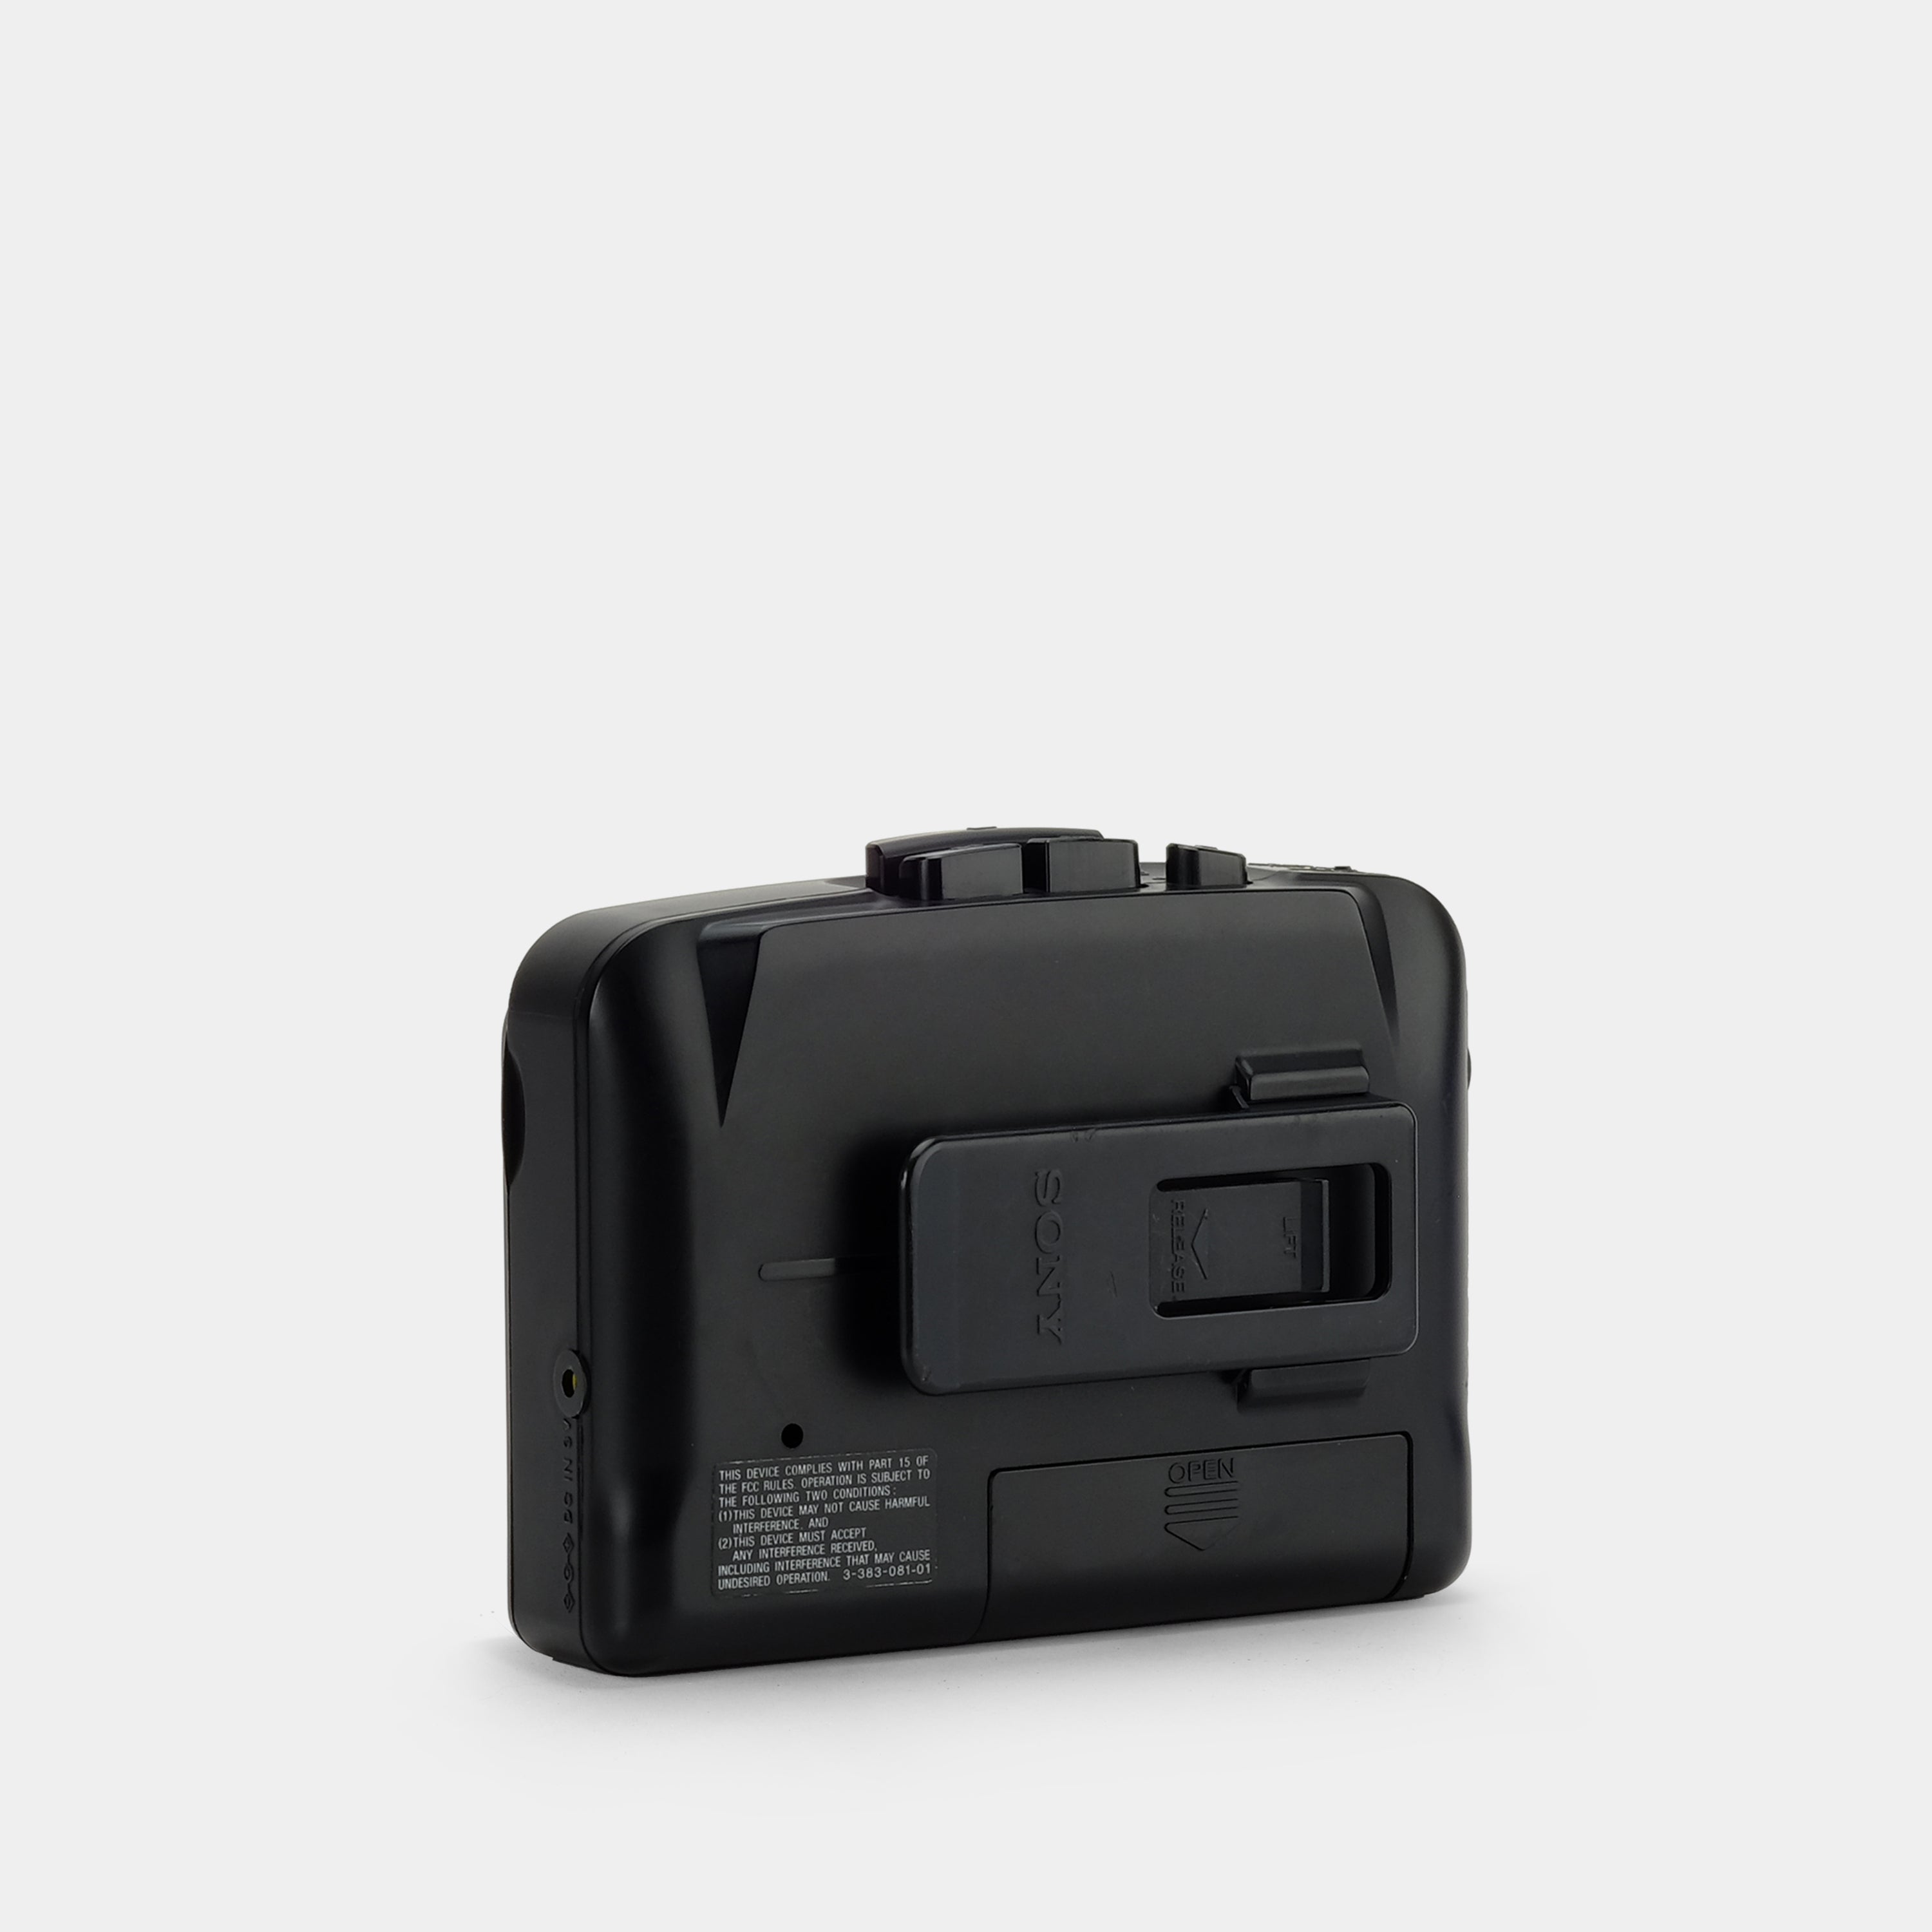 Sony Walkman WM-FX221 AM/FM Portable Cassette Player